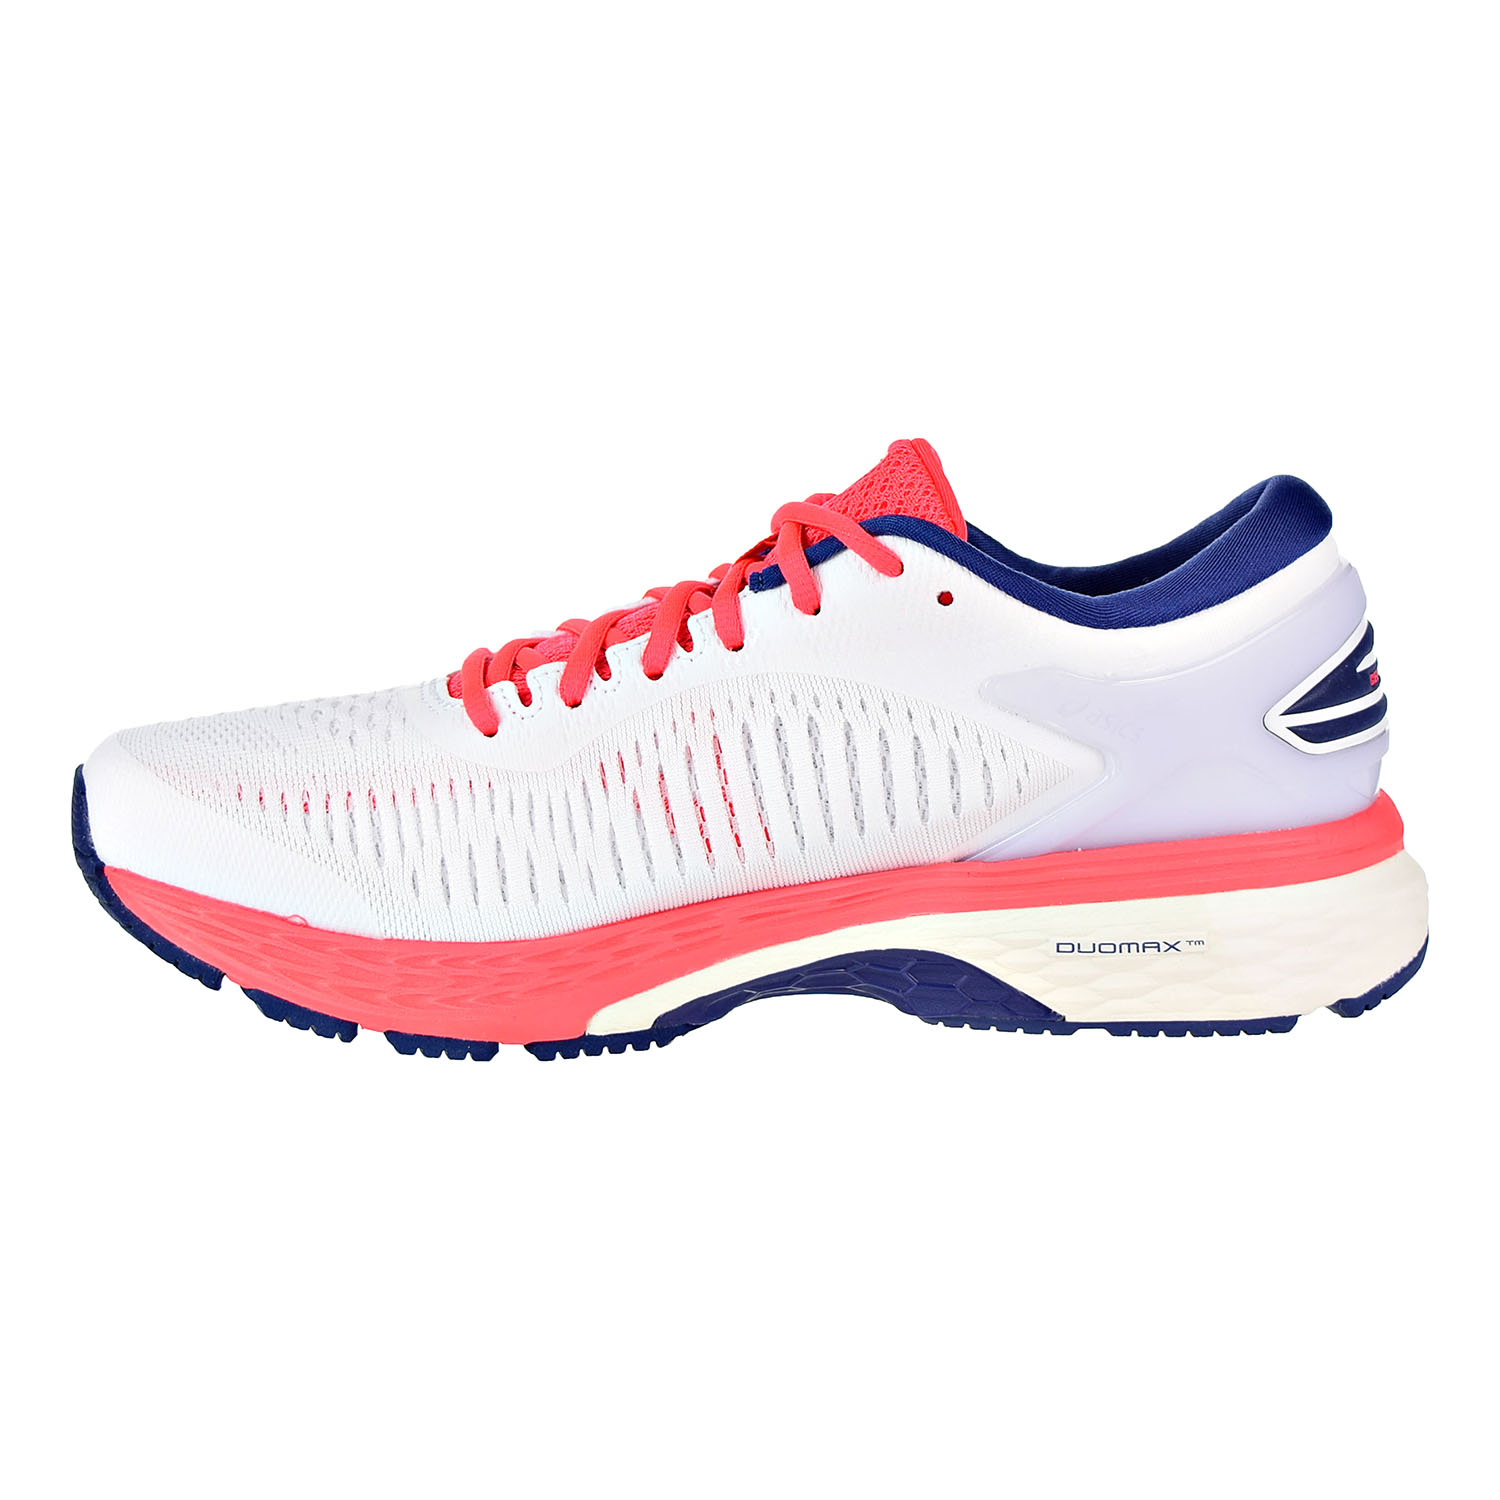 Asics Gel-Kayano 25 Women's Running Shoes White/White 1012a026-100 (6 B(M) US)